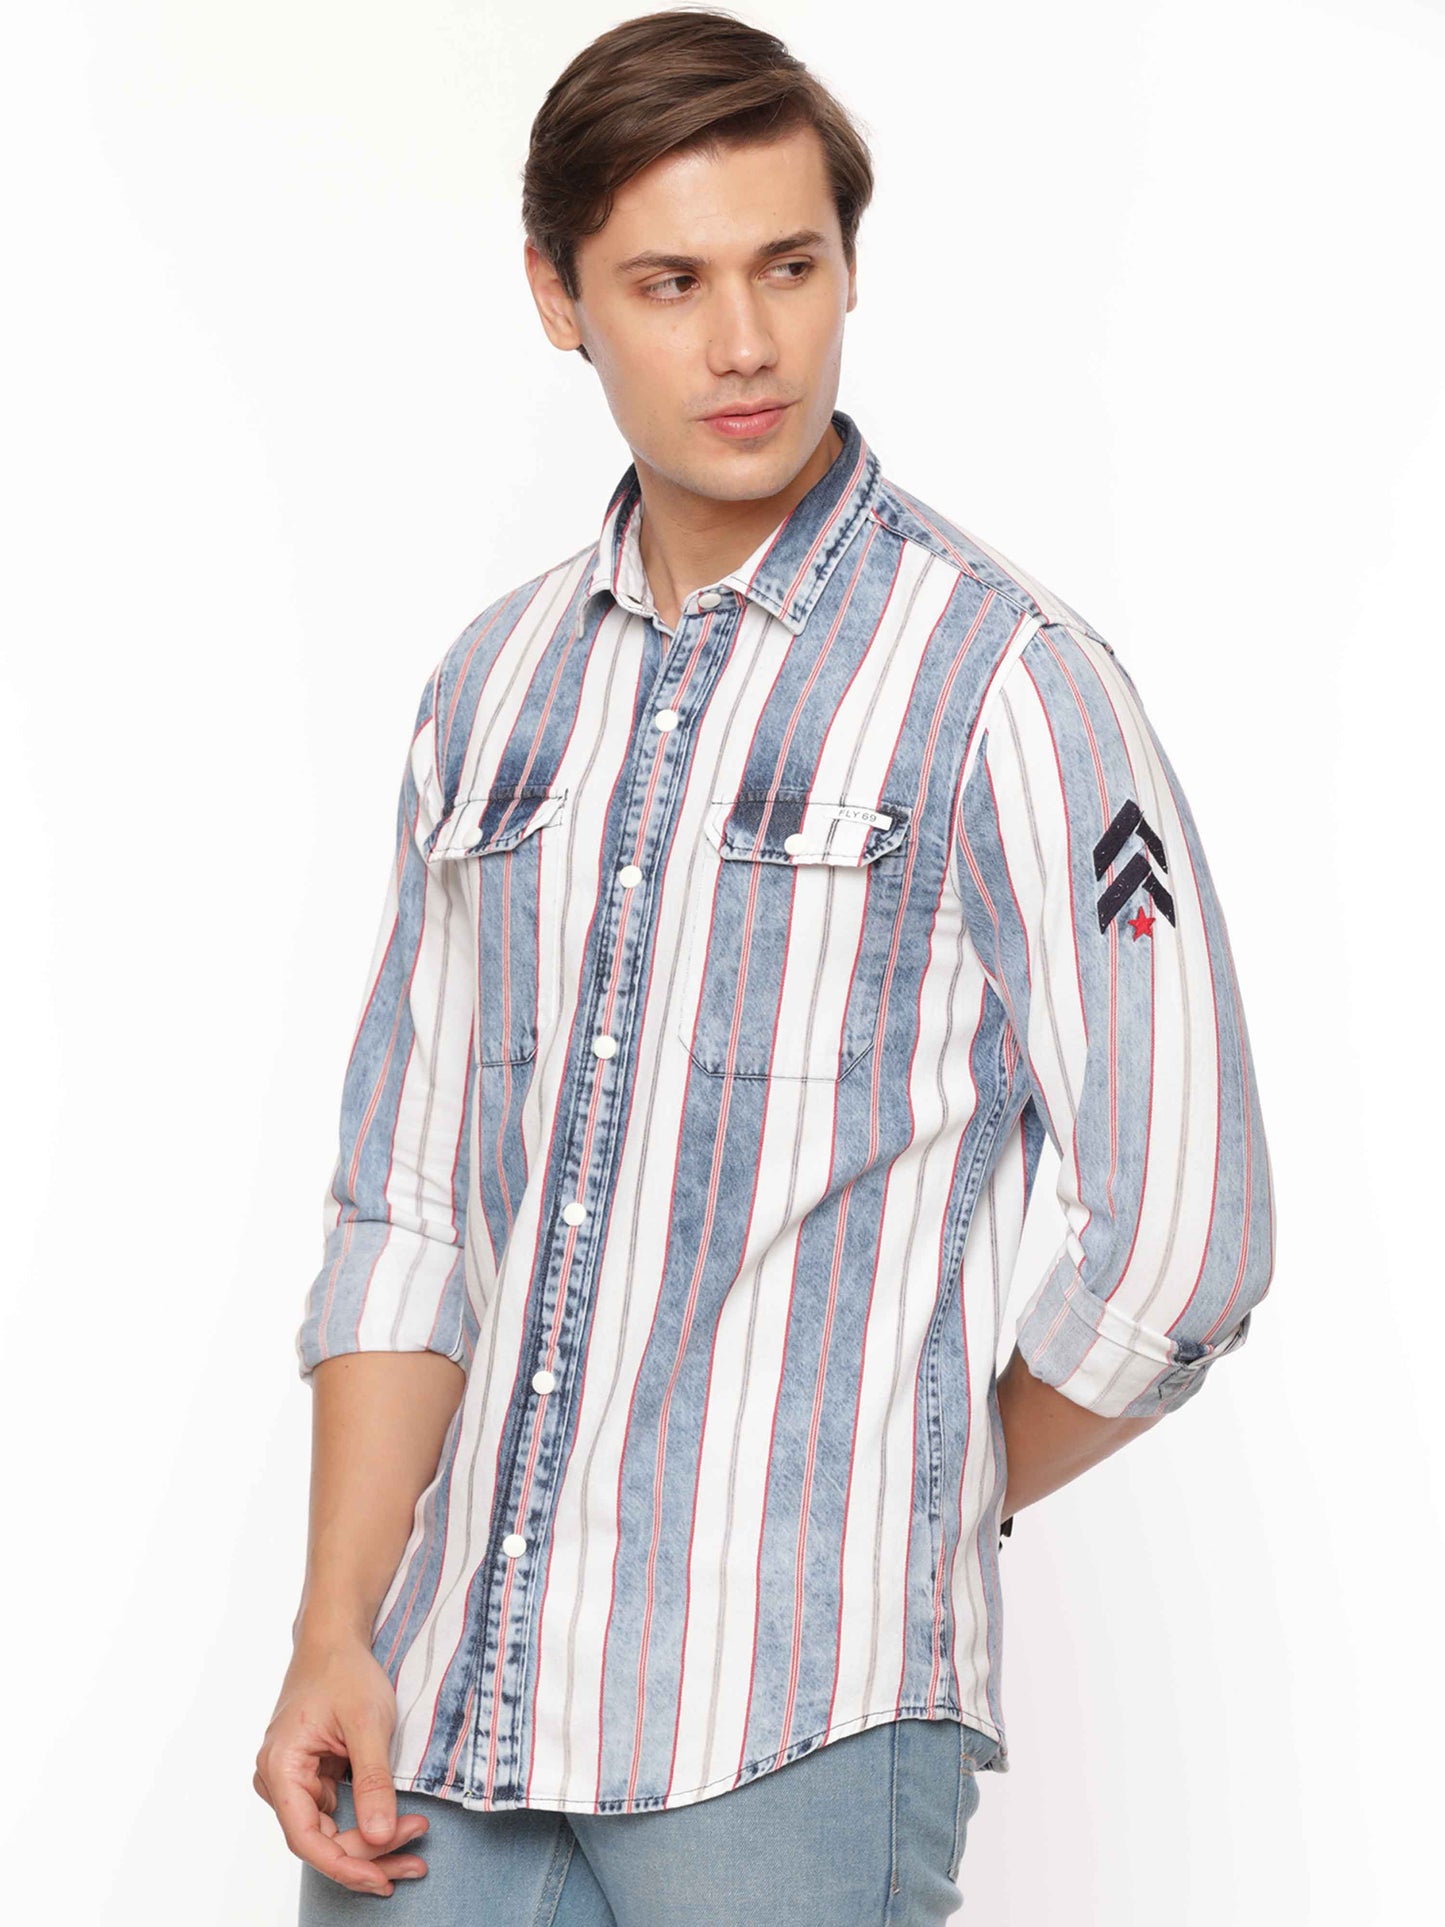 Dull Blue Striped Shirt